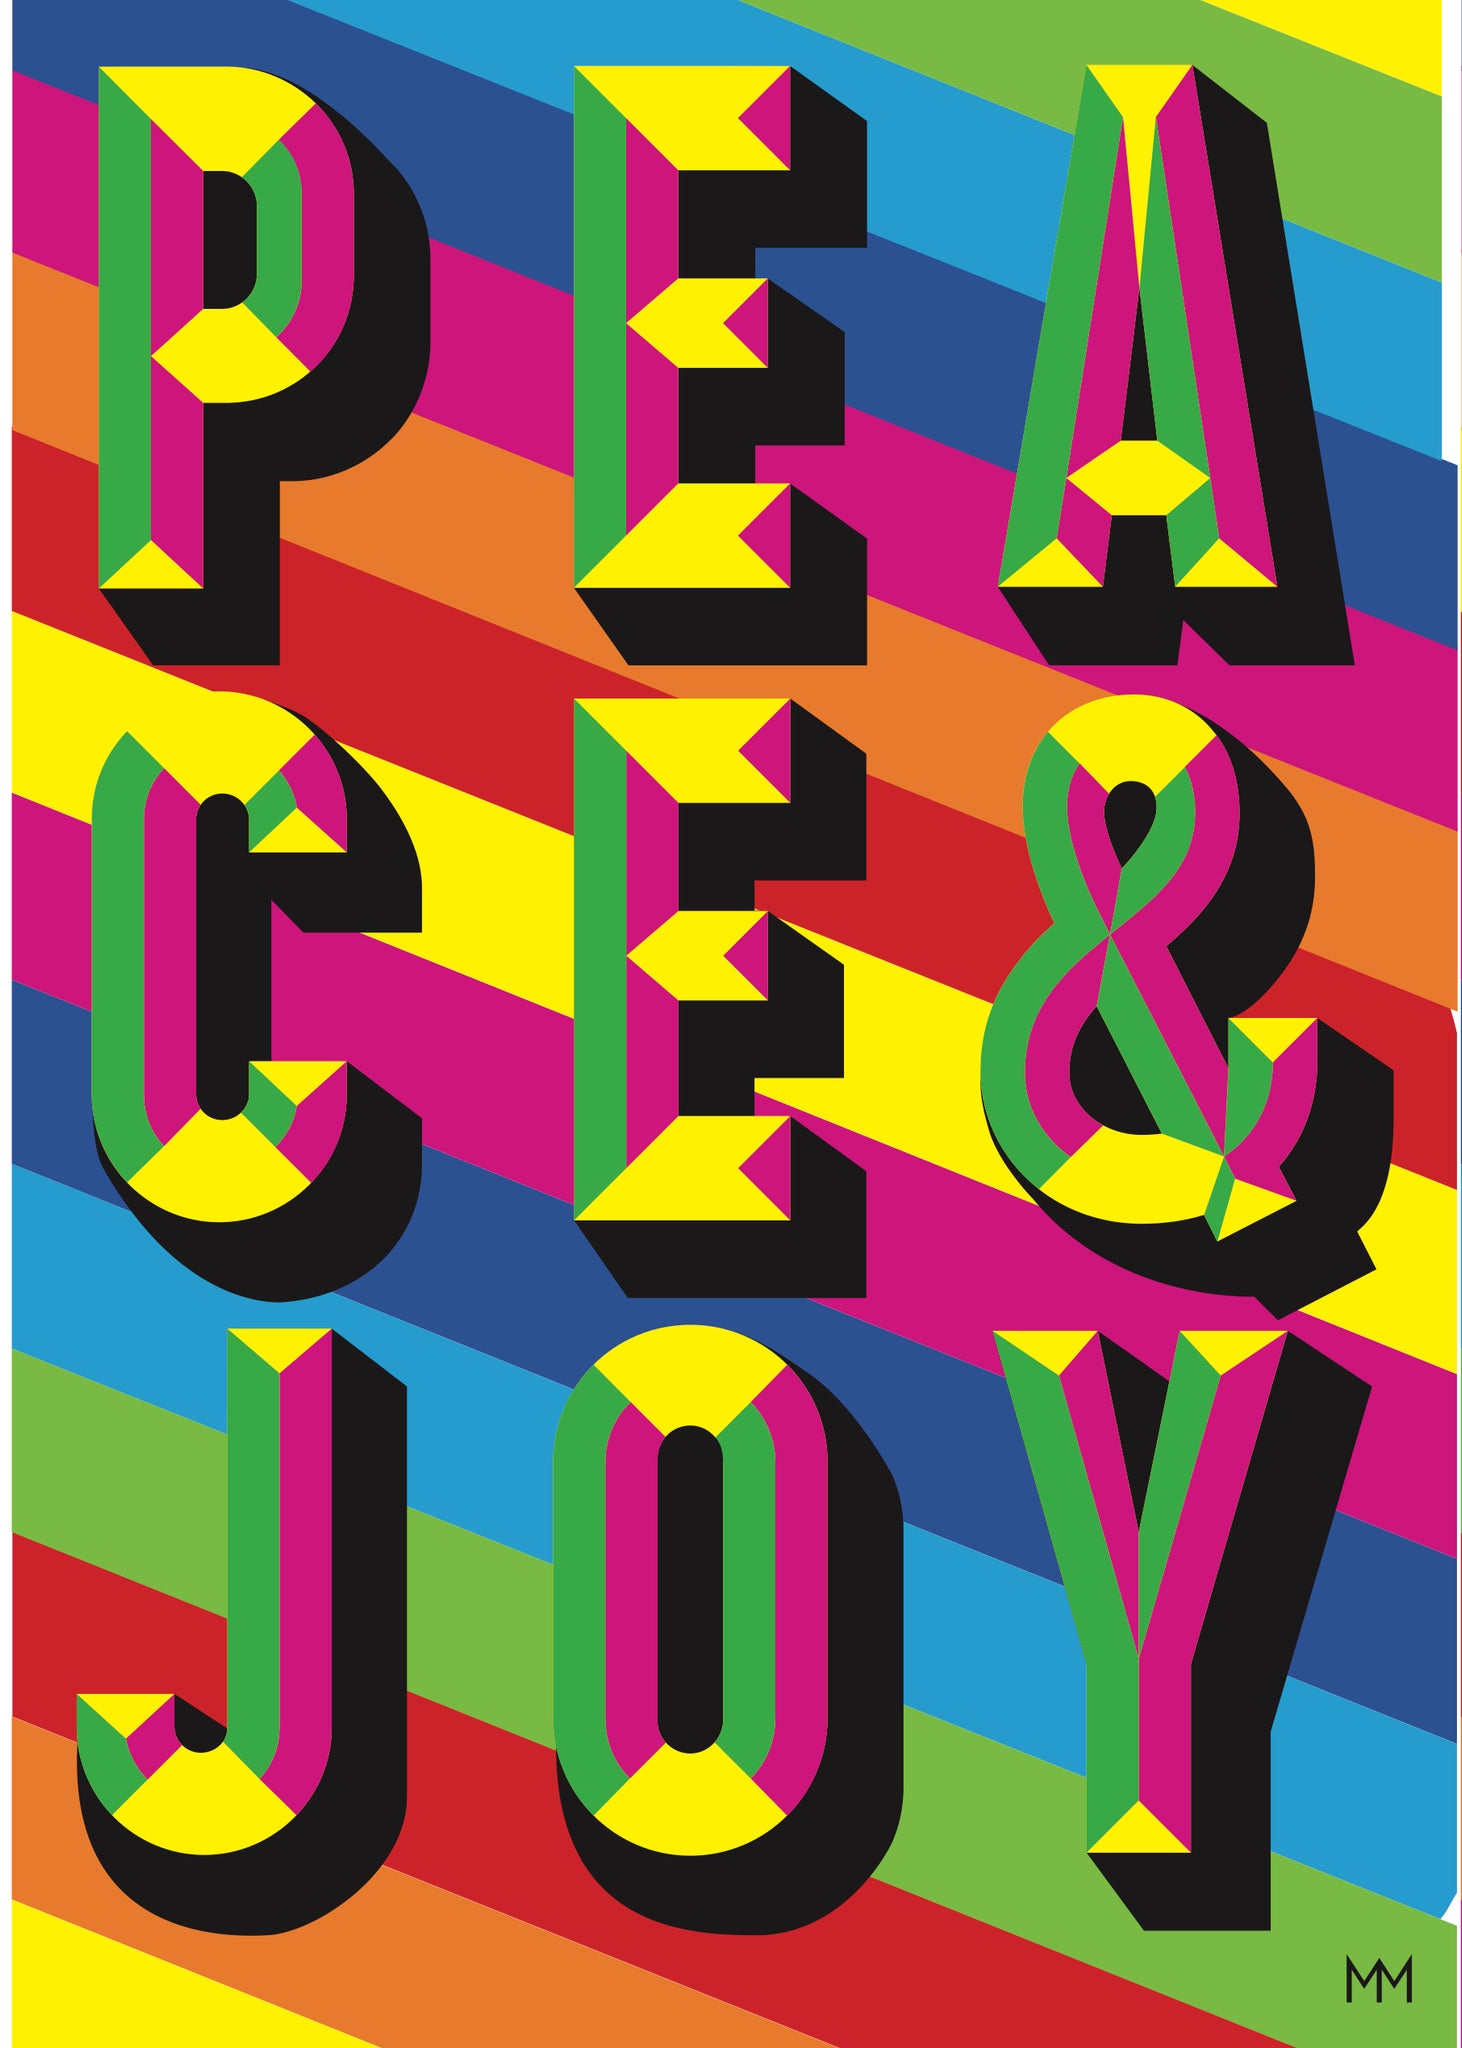 PEACE & JOY